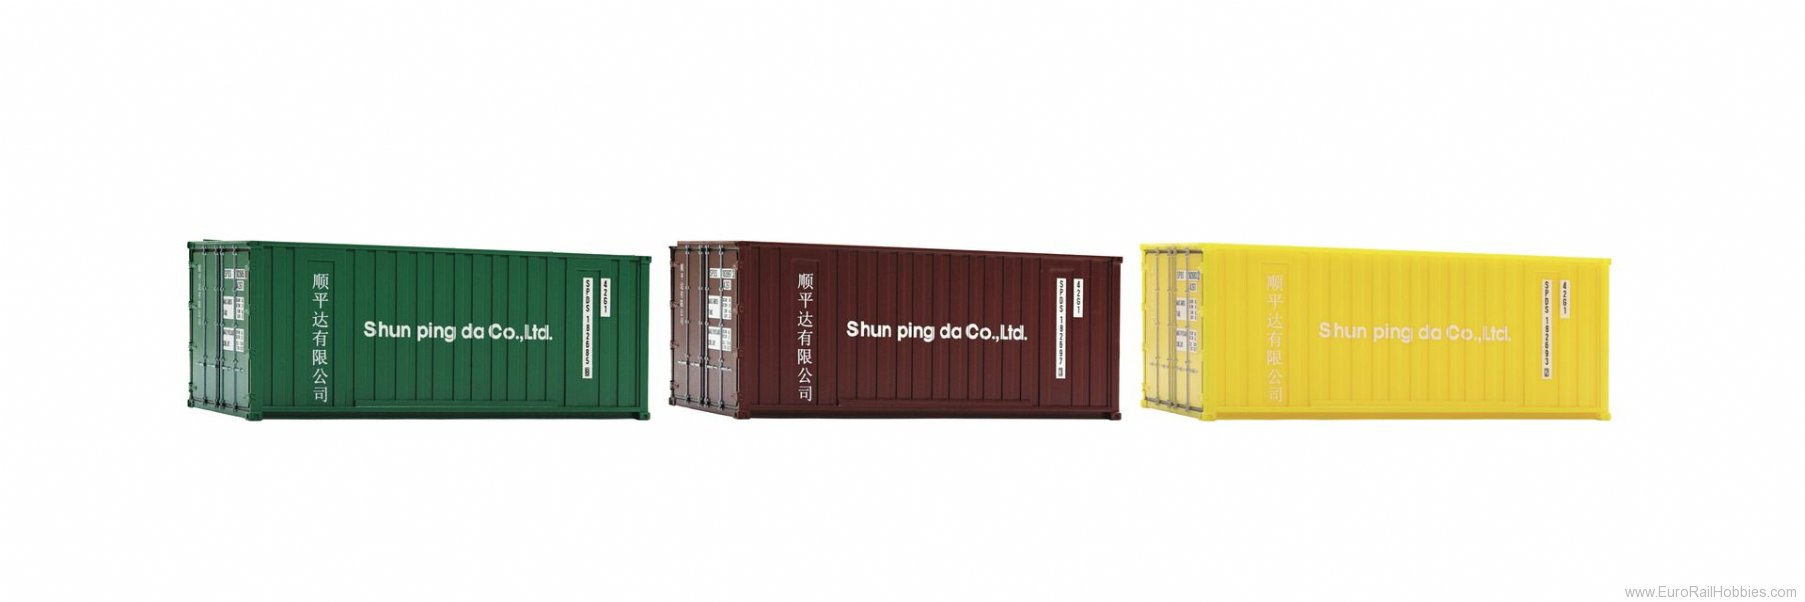 Roco 05217 3 piece set: 20 ft container 